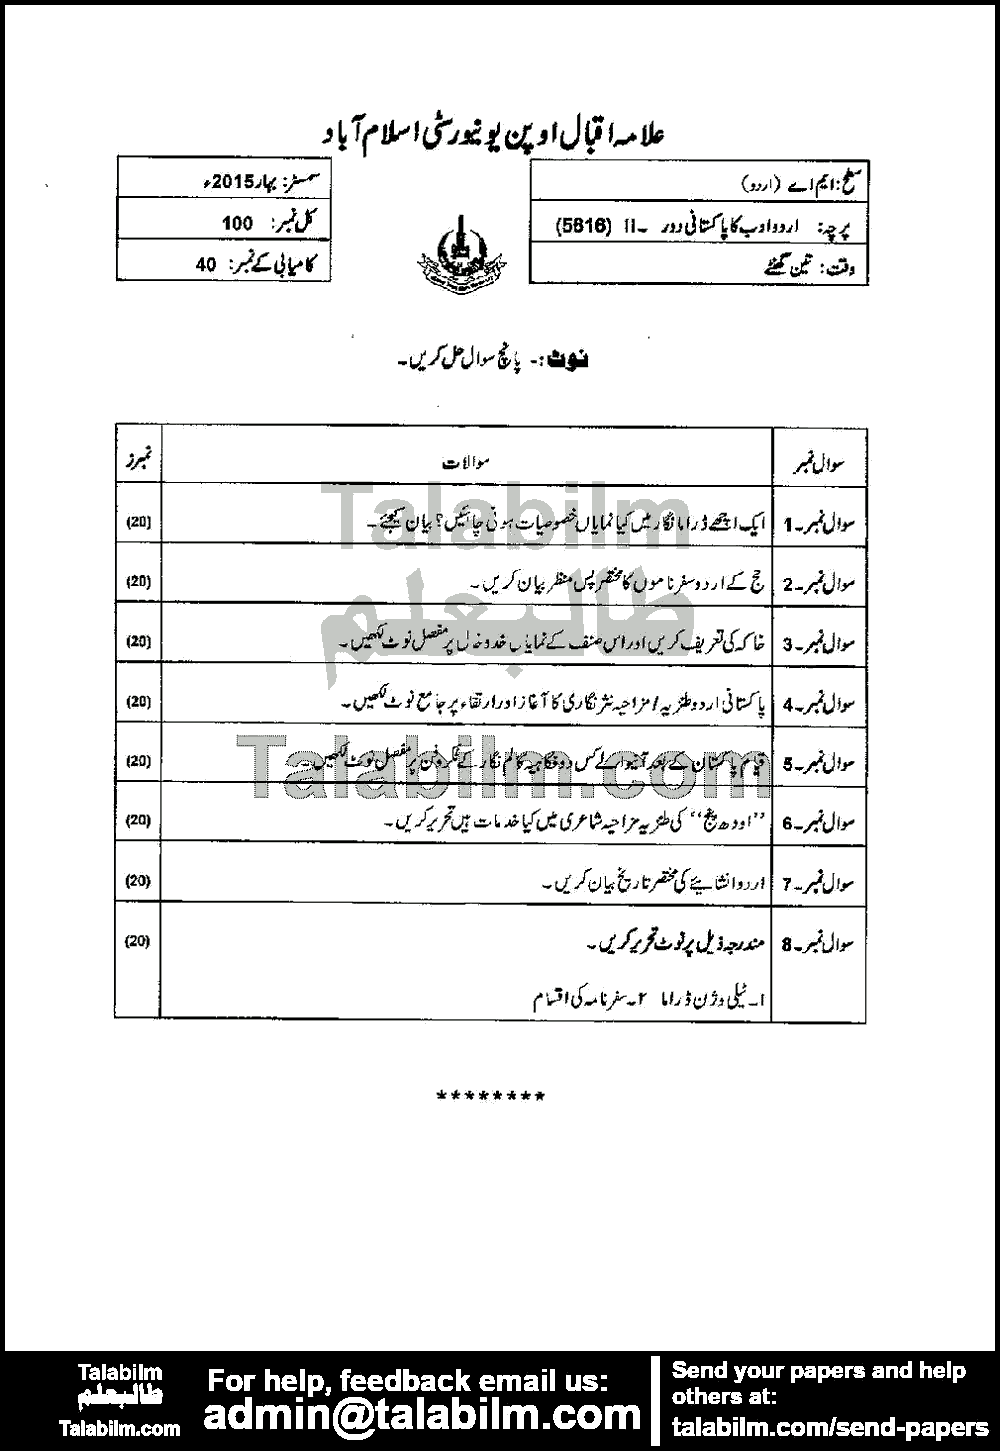 Urdu Literature in Pakistani Period-II 5616 past paper for Spring 2015